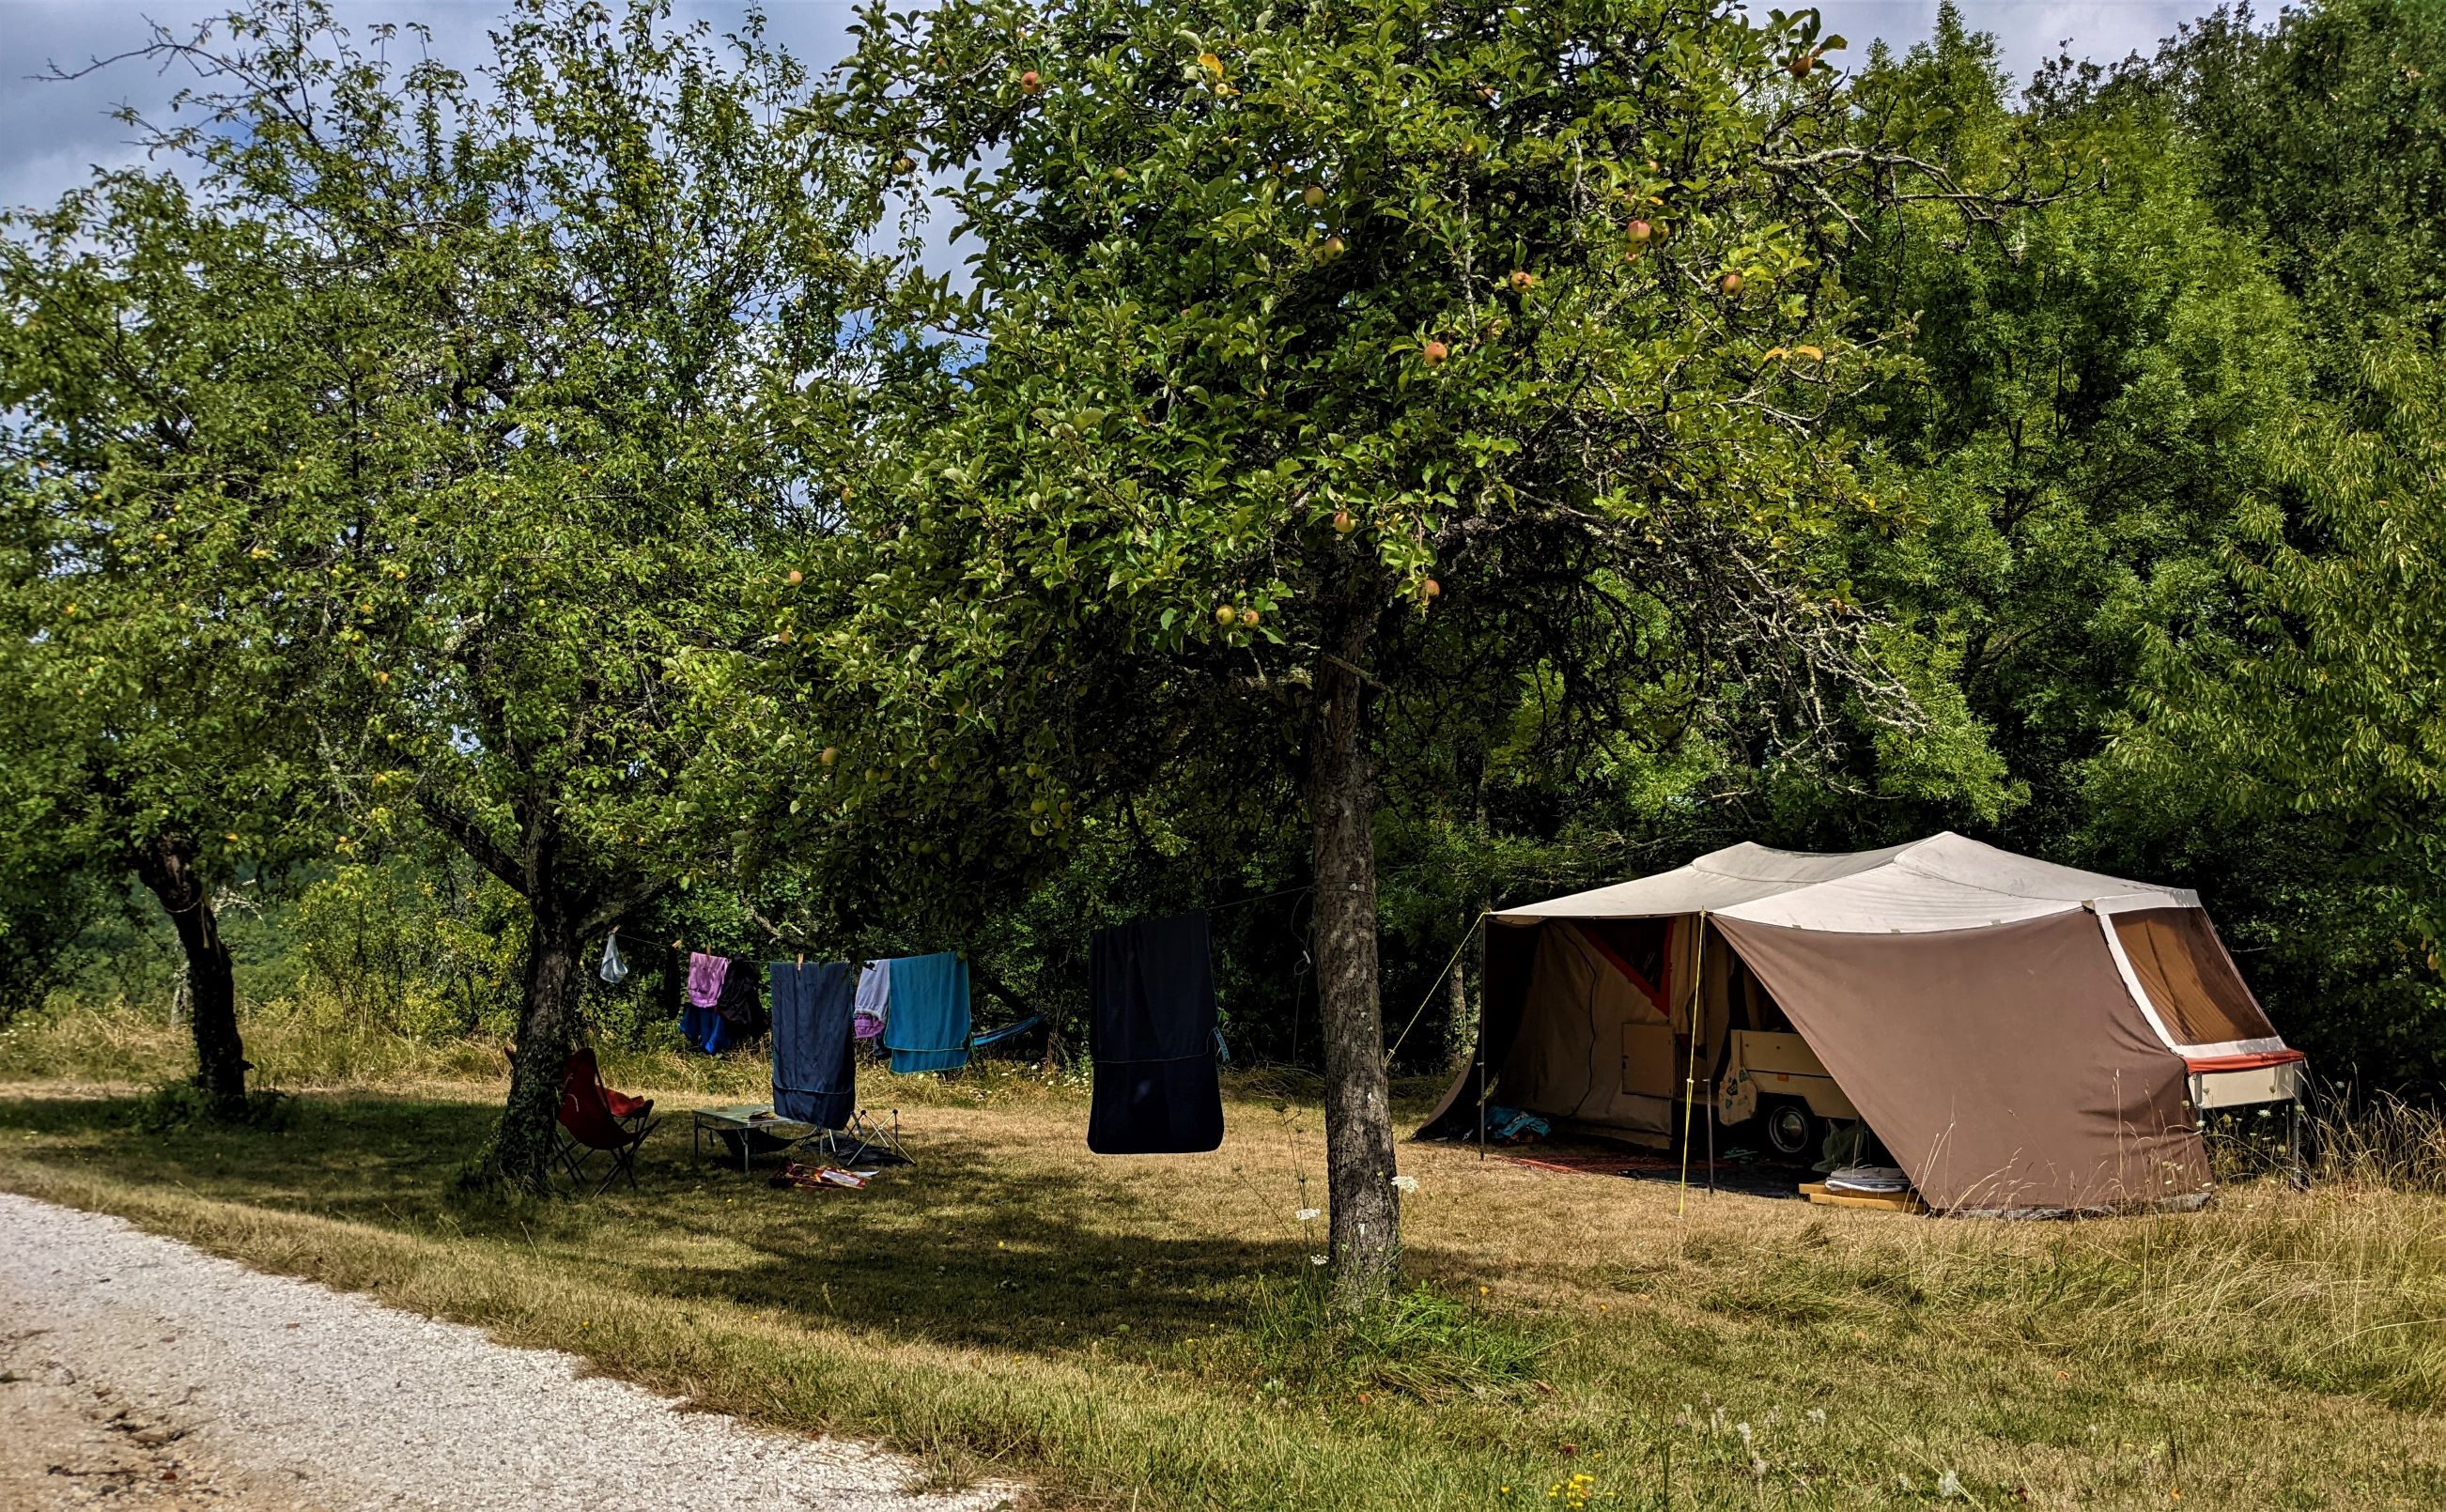 Camping tente